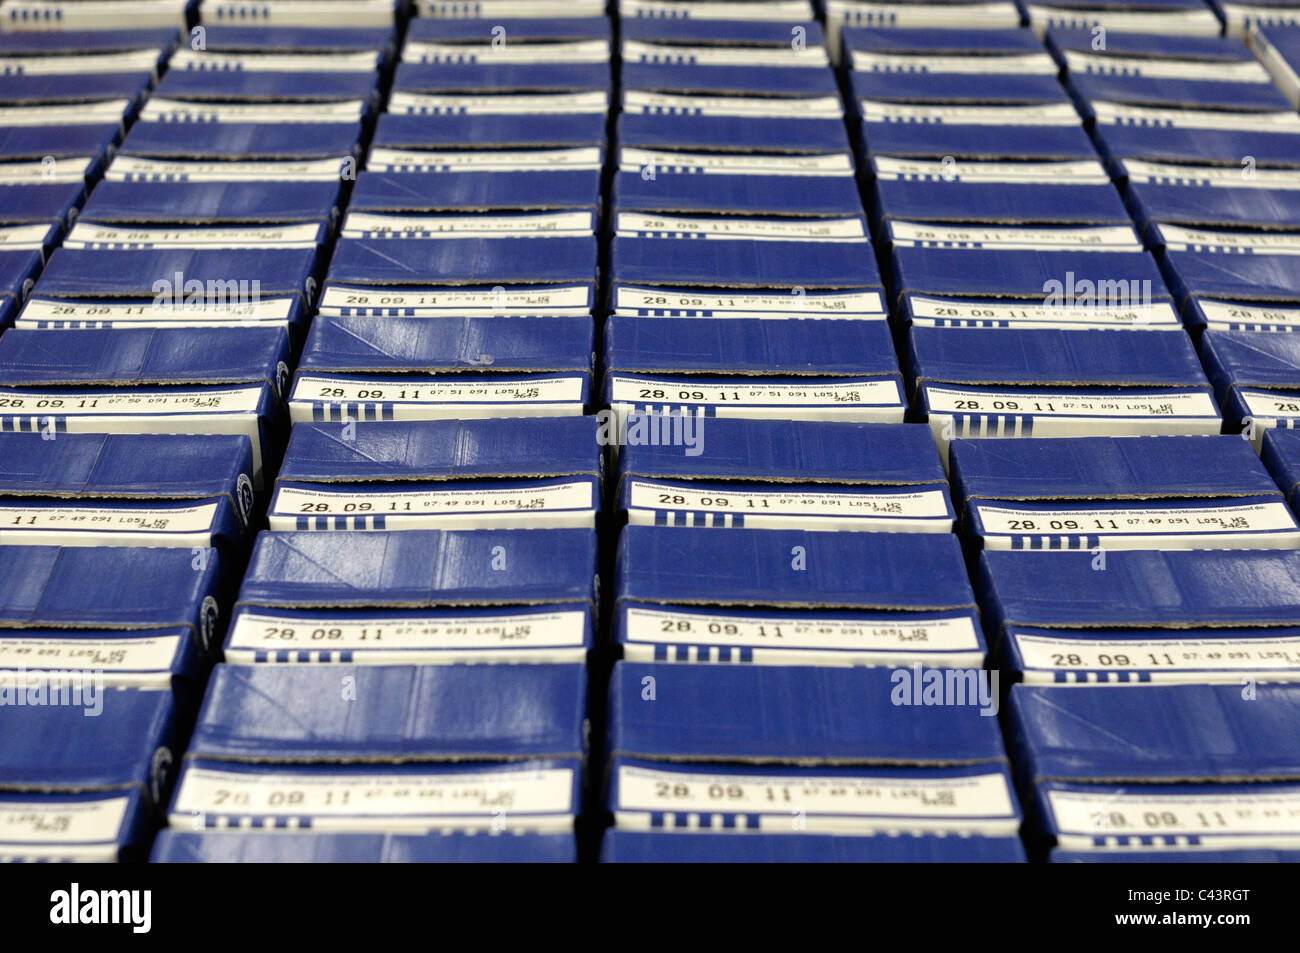 Rows of Tesco 'value' brand milk cartons. Stock Photo